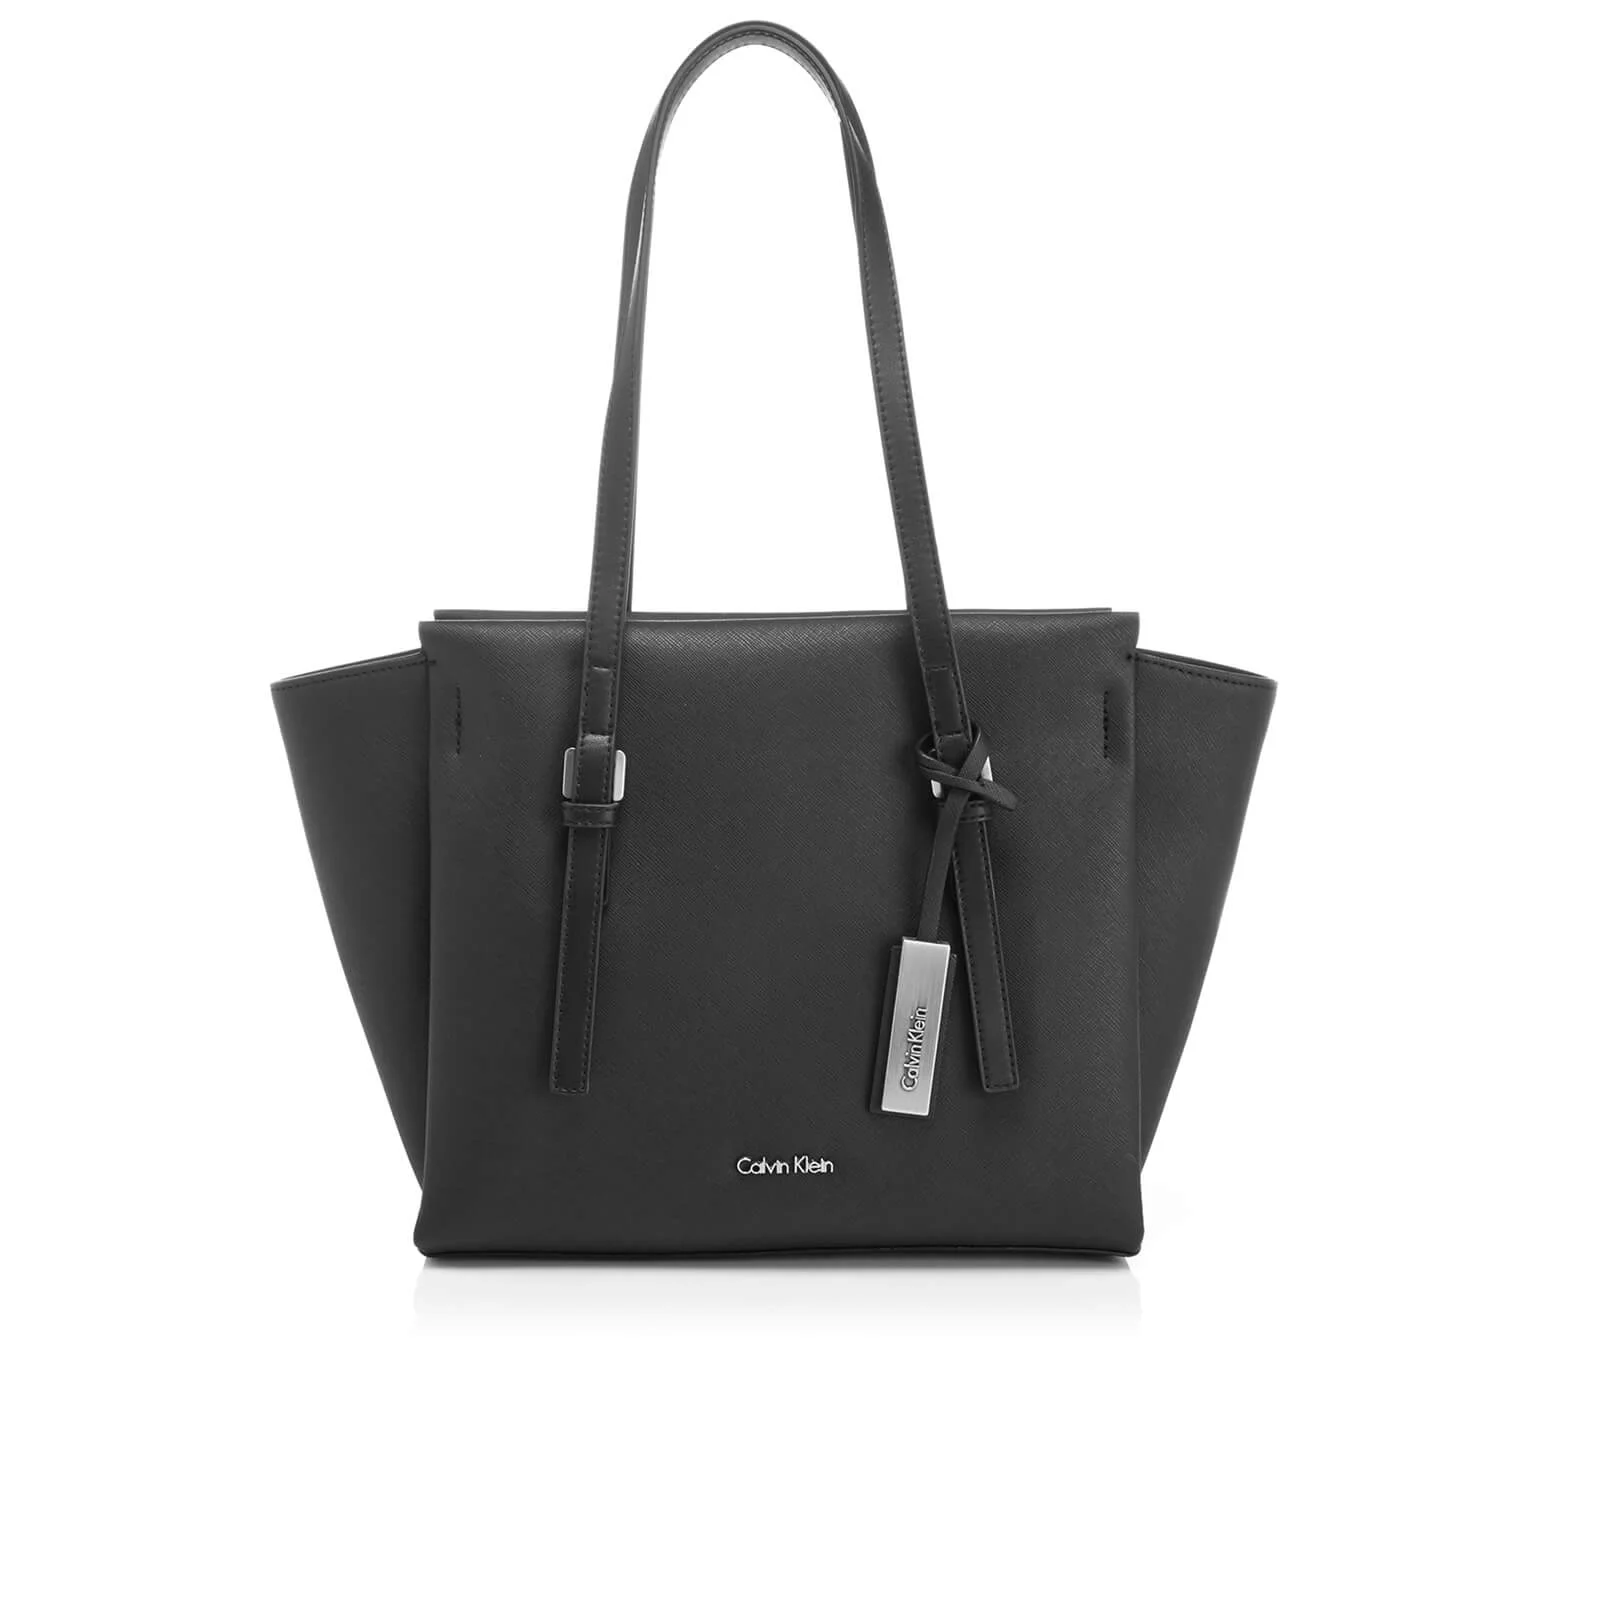 Calvin Klein Women's M4Rissa Medium Tote Bag - Black Image 1